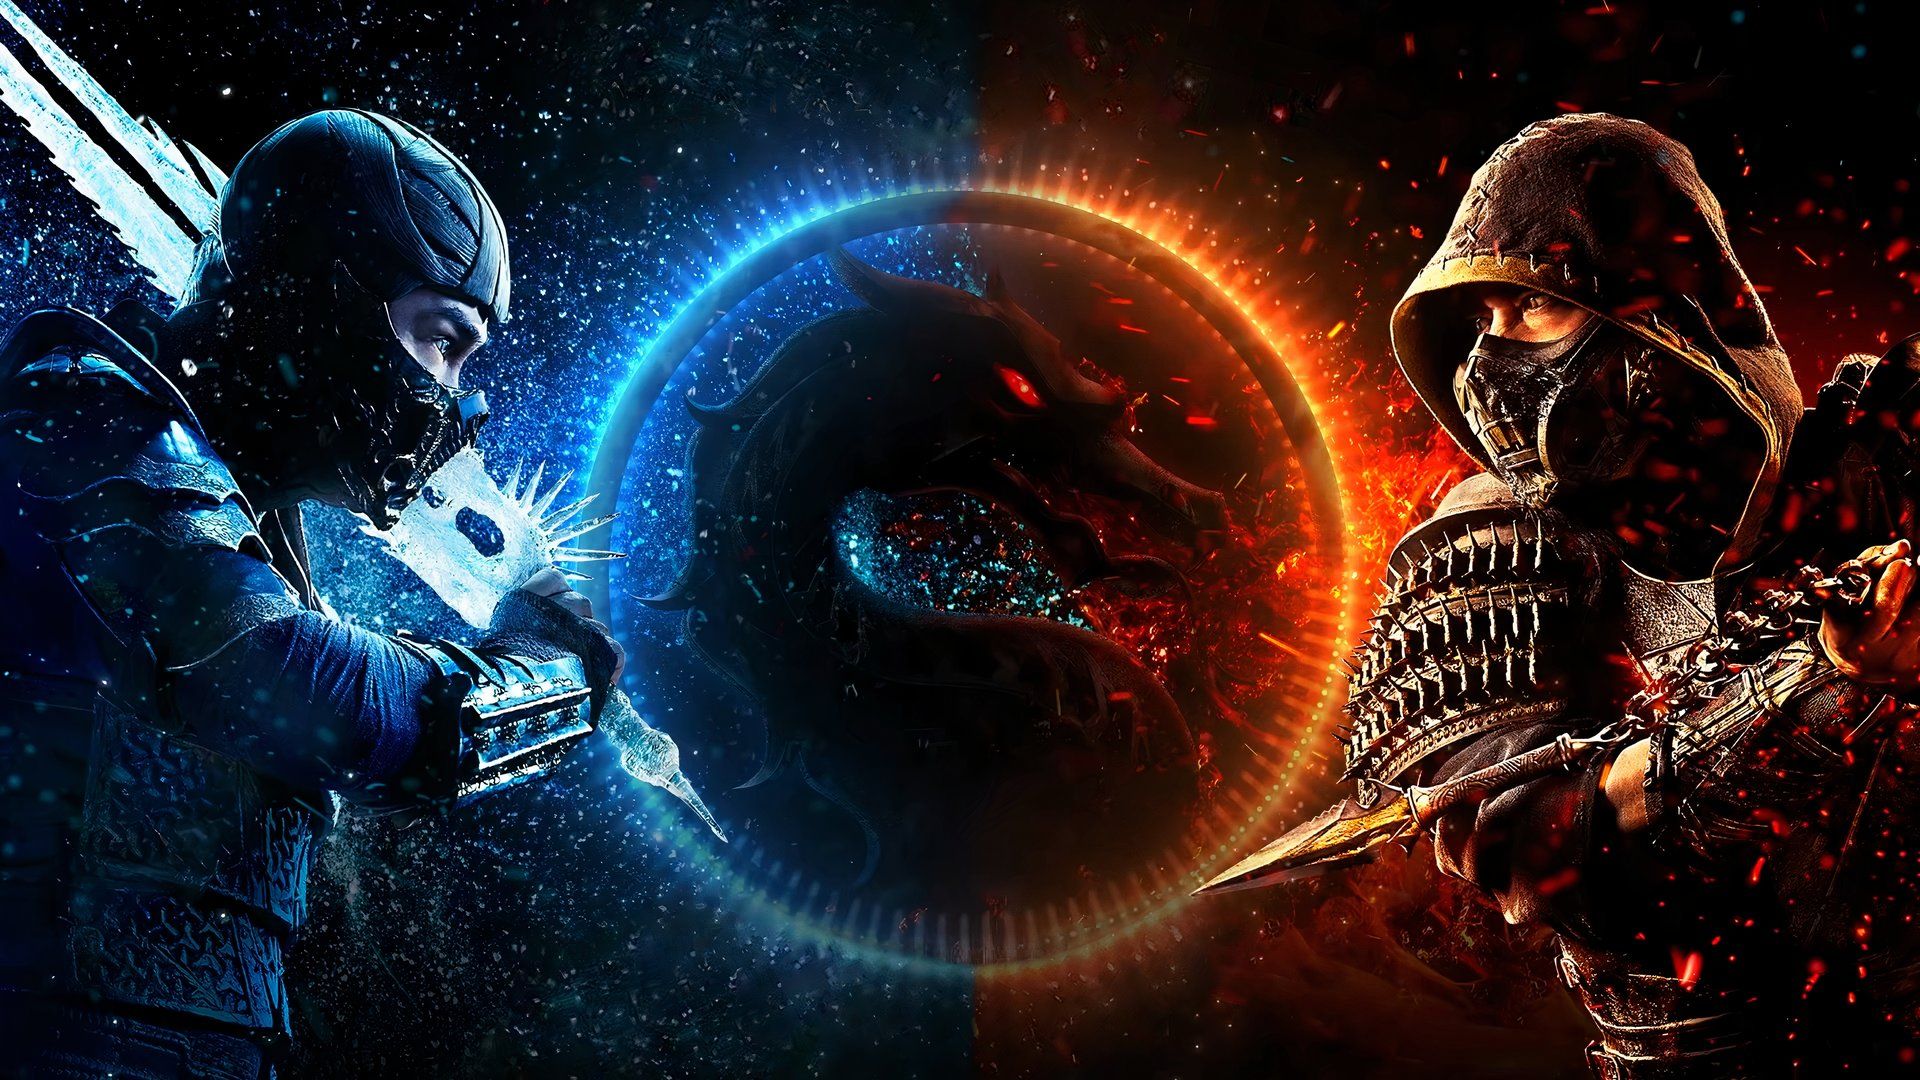 Sub-Zero & Scorpion face-off in front of the Mortal Kombat logo.